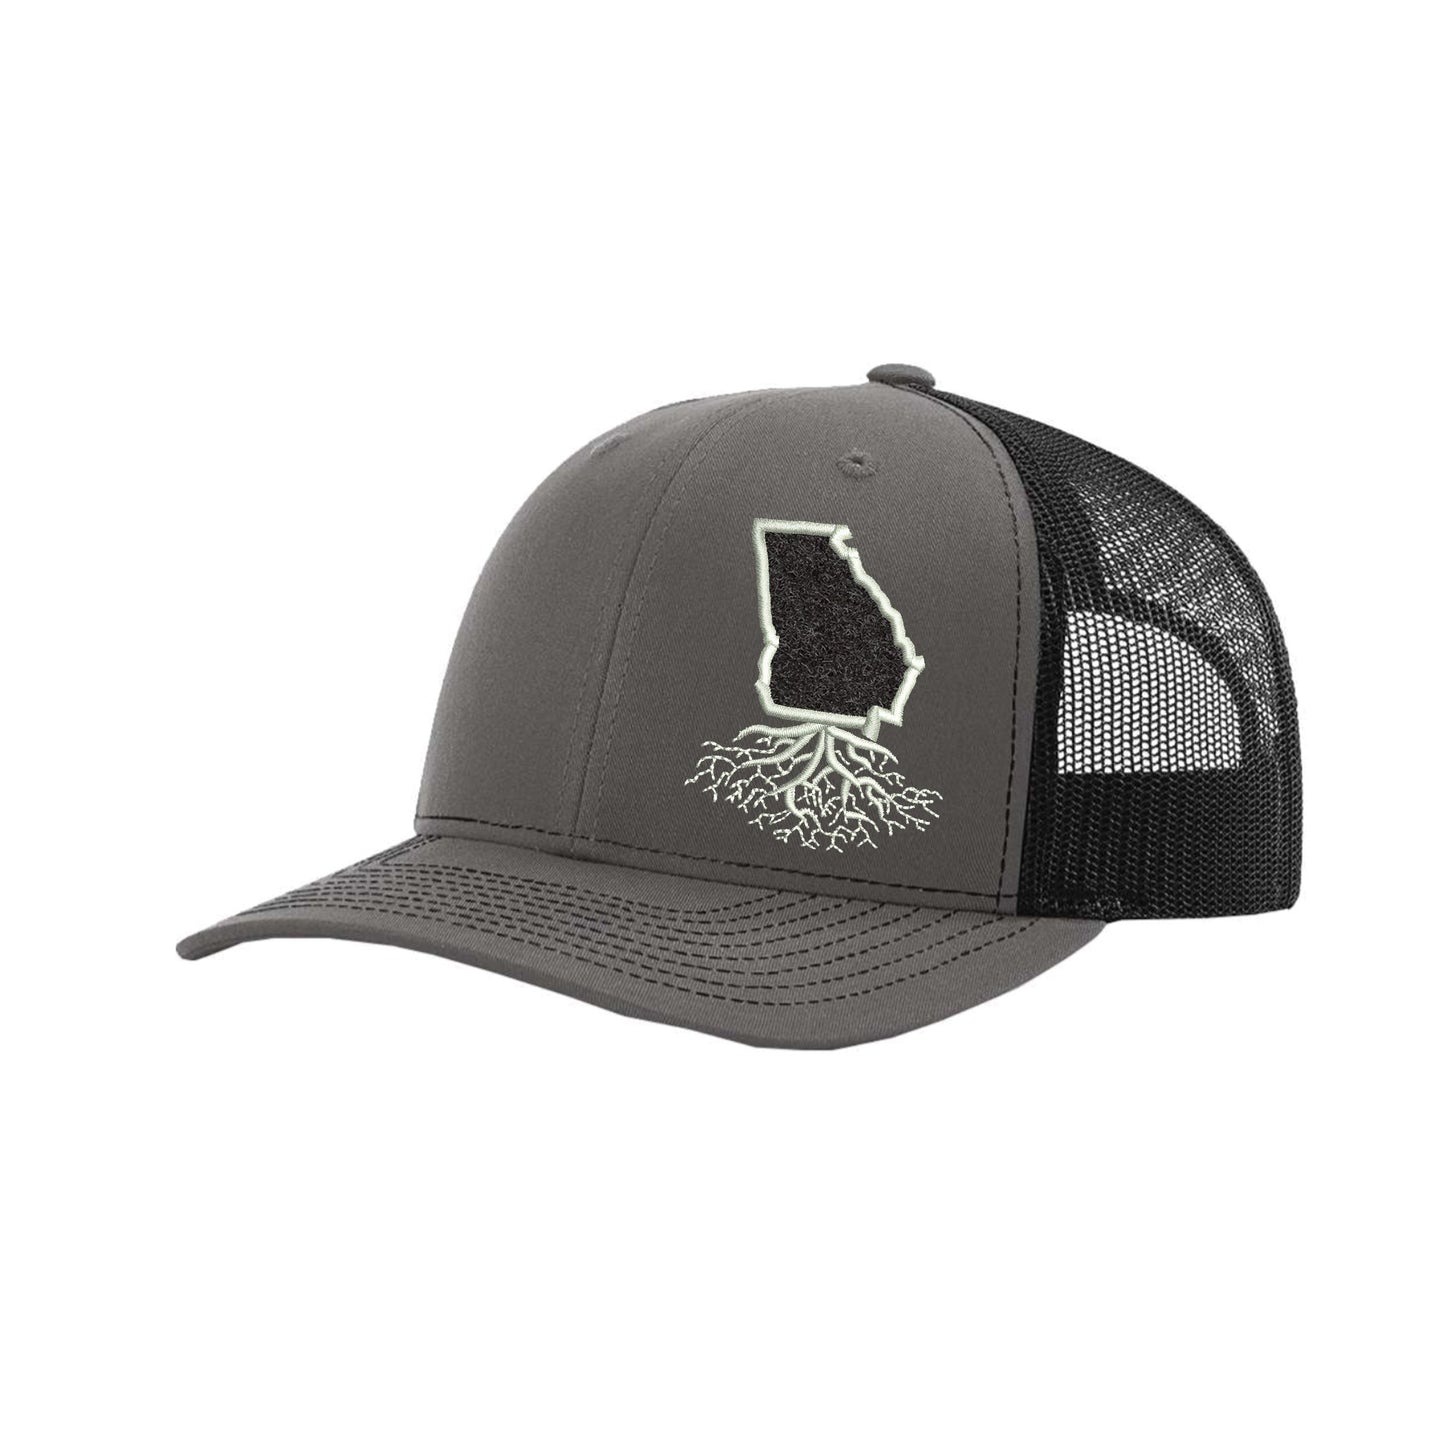 Georgia Hook & Loop Trucker Cap - Hats